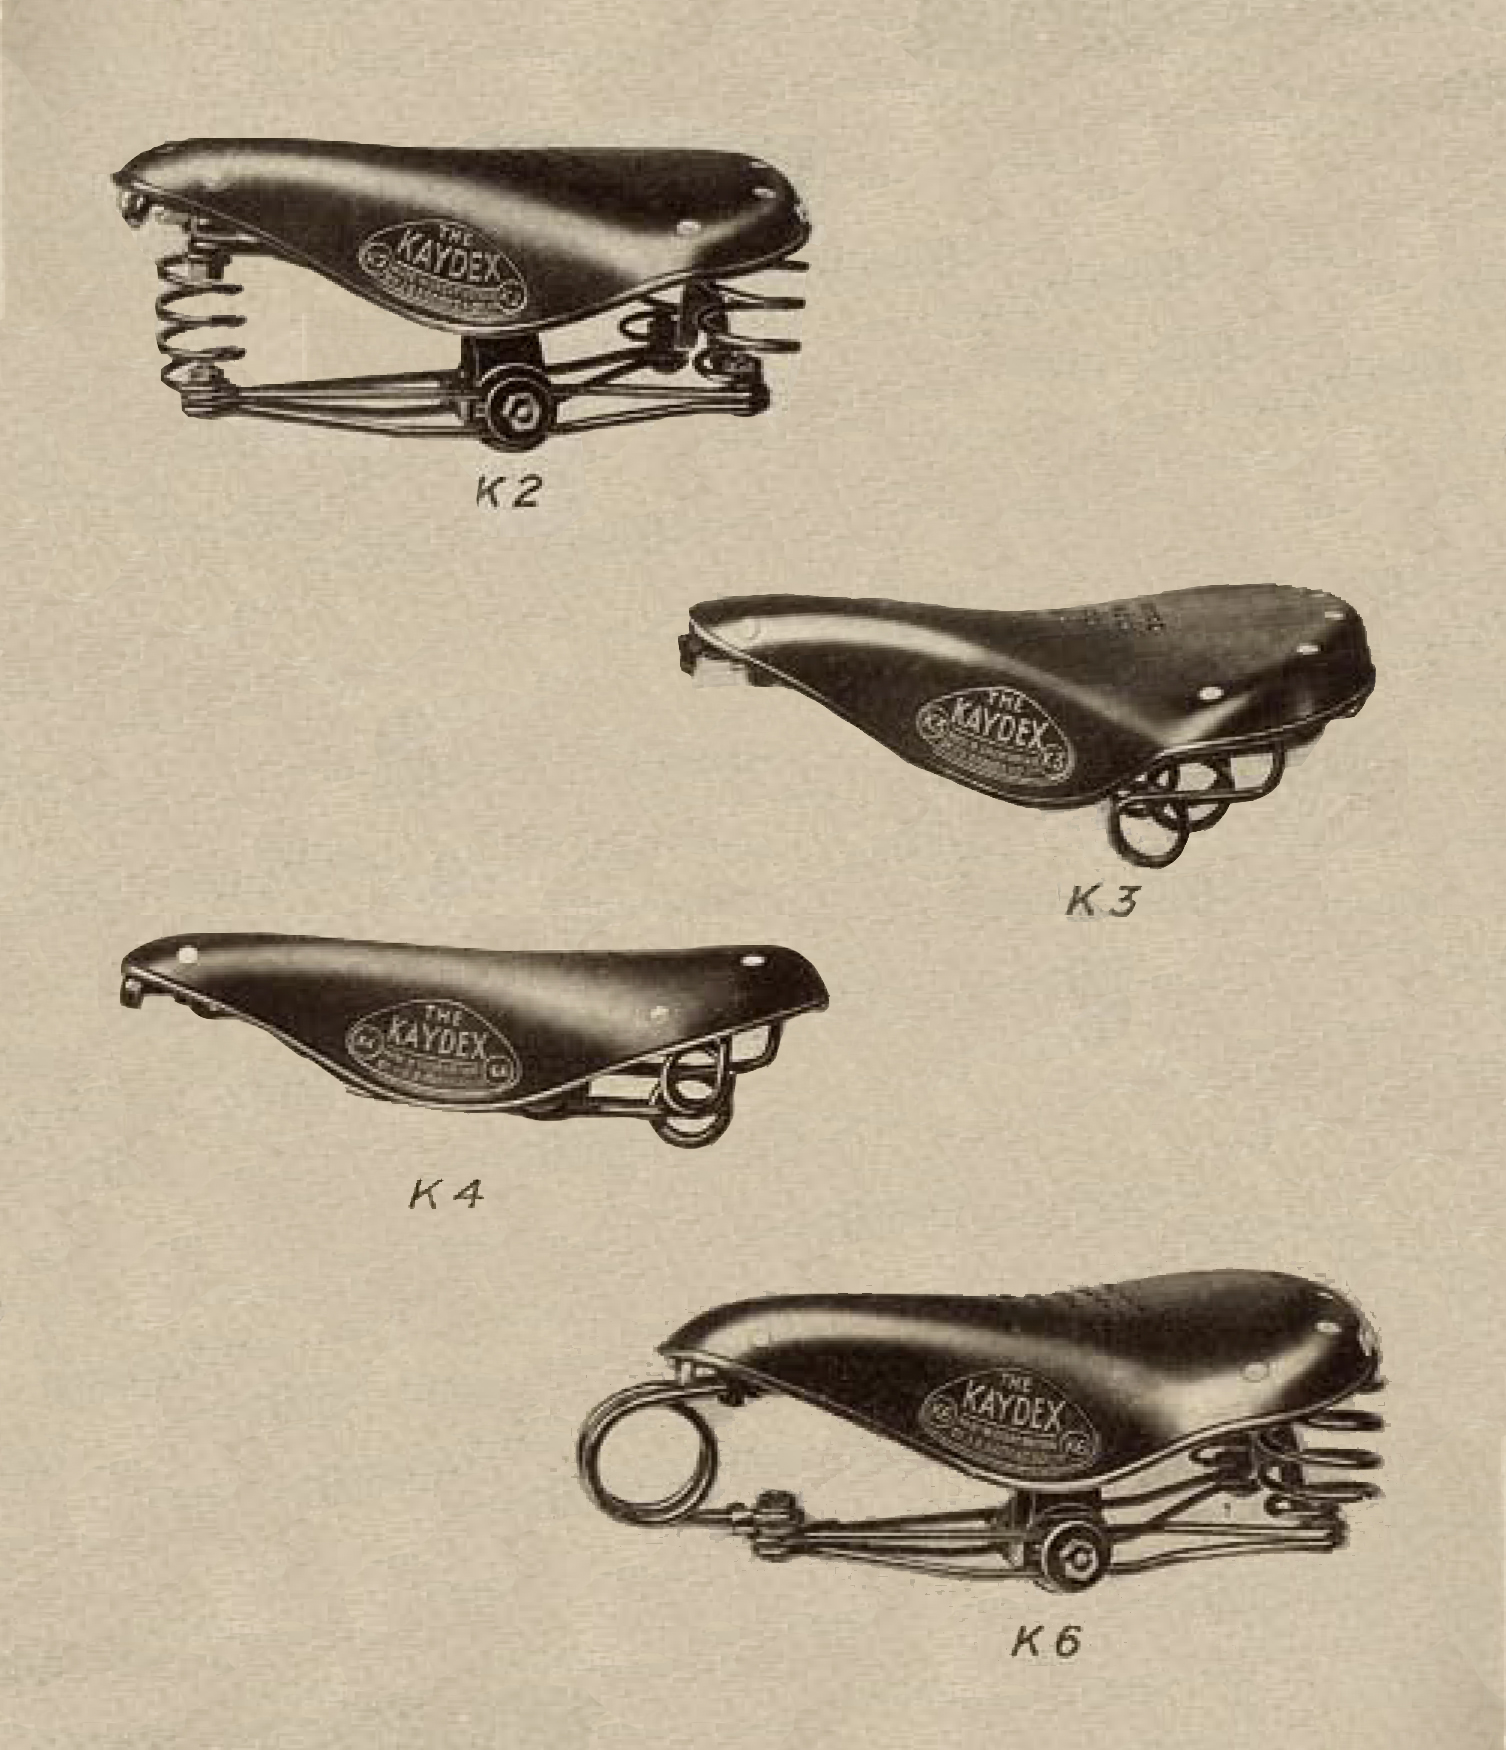 ebykr-brooks-kaydex-saddles-1933-catalog